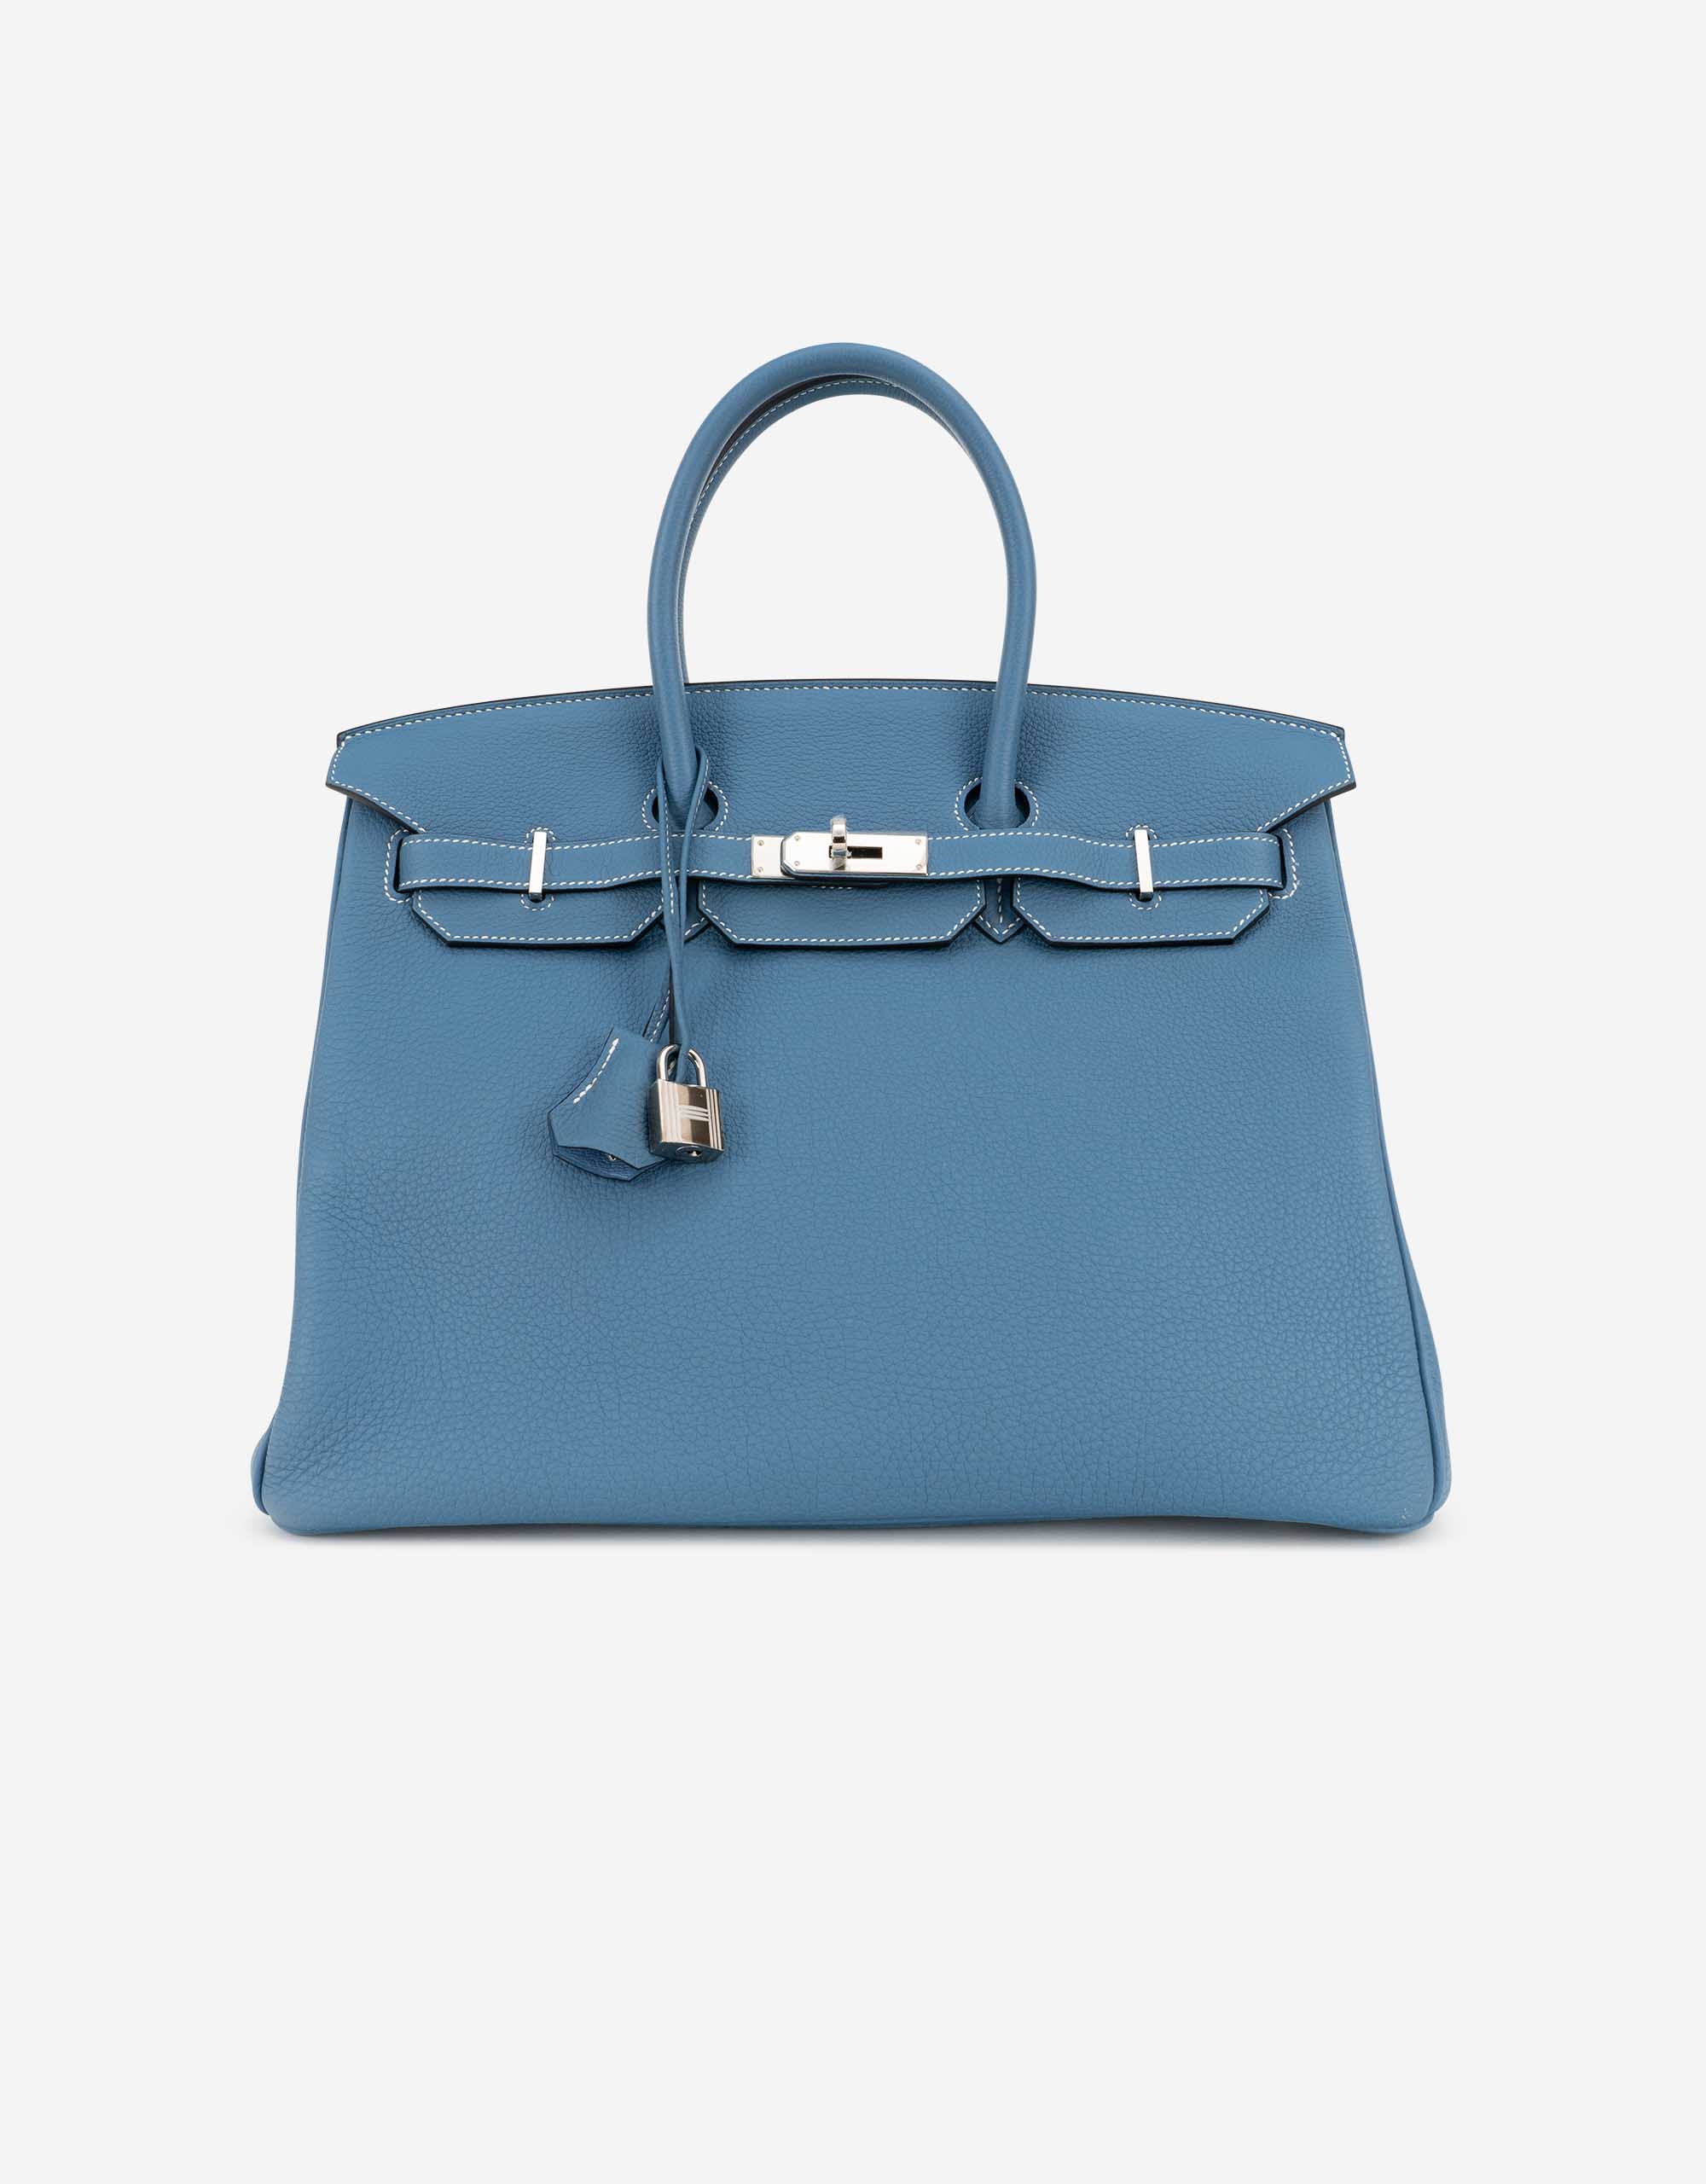 Hermès Birkin 35 Togo Blue Jean | SACLÀB